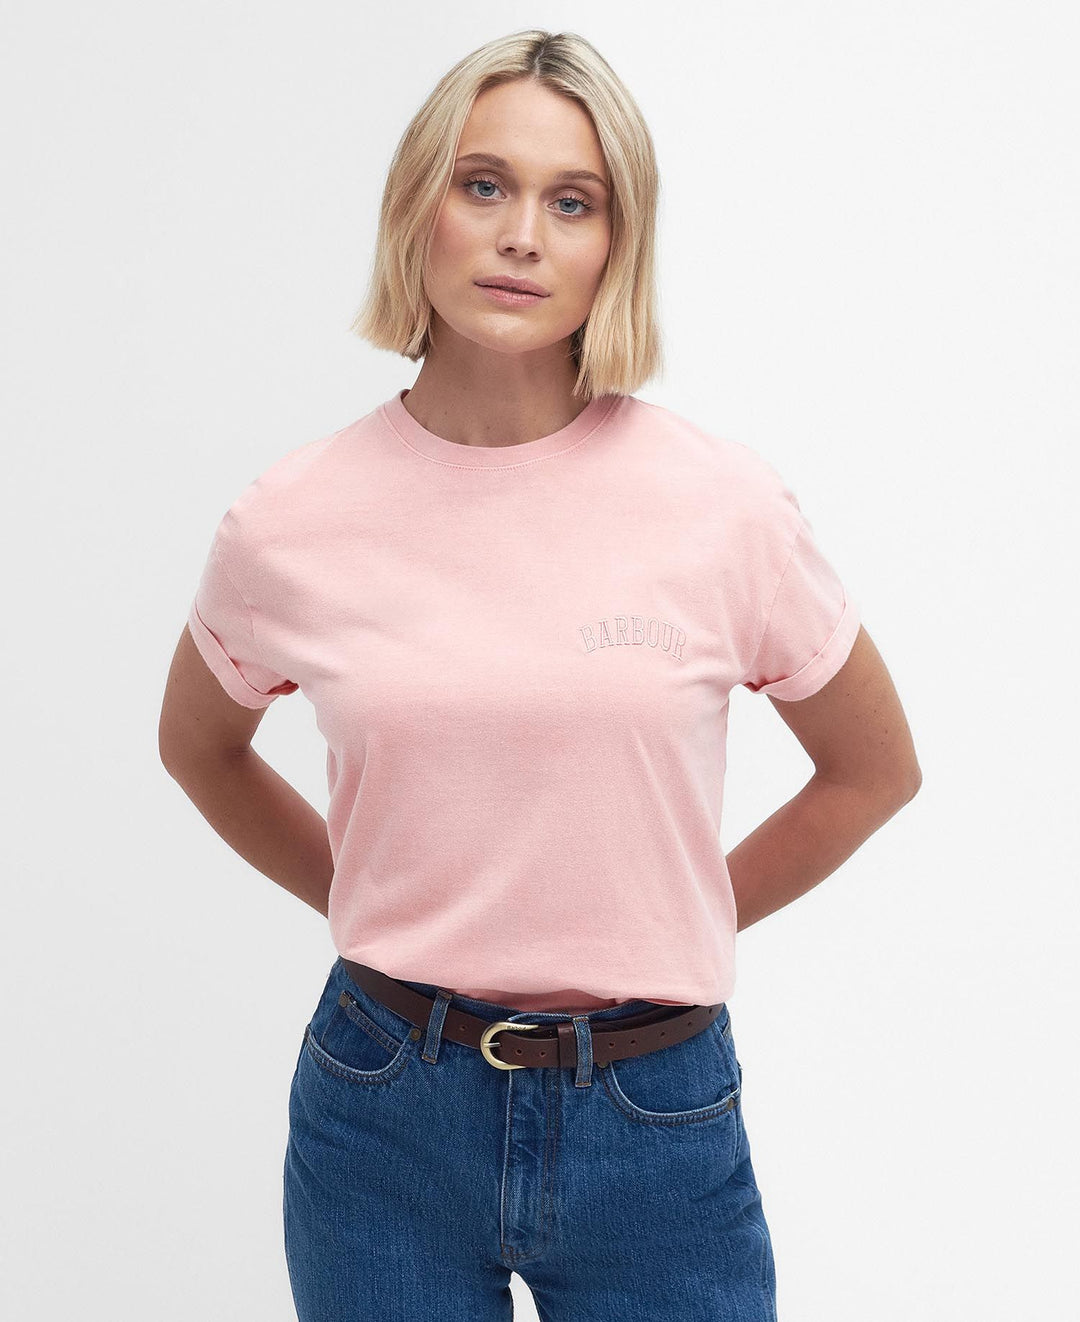 Barbour Ladies Sandgate T-shirt in Pink#Pink